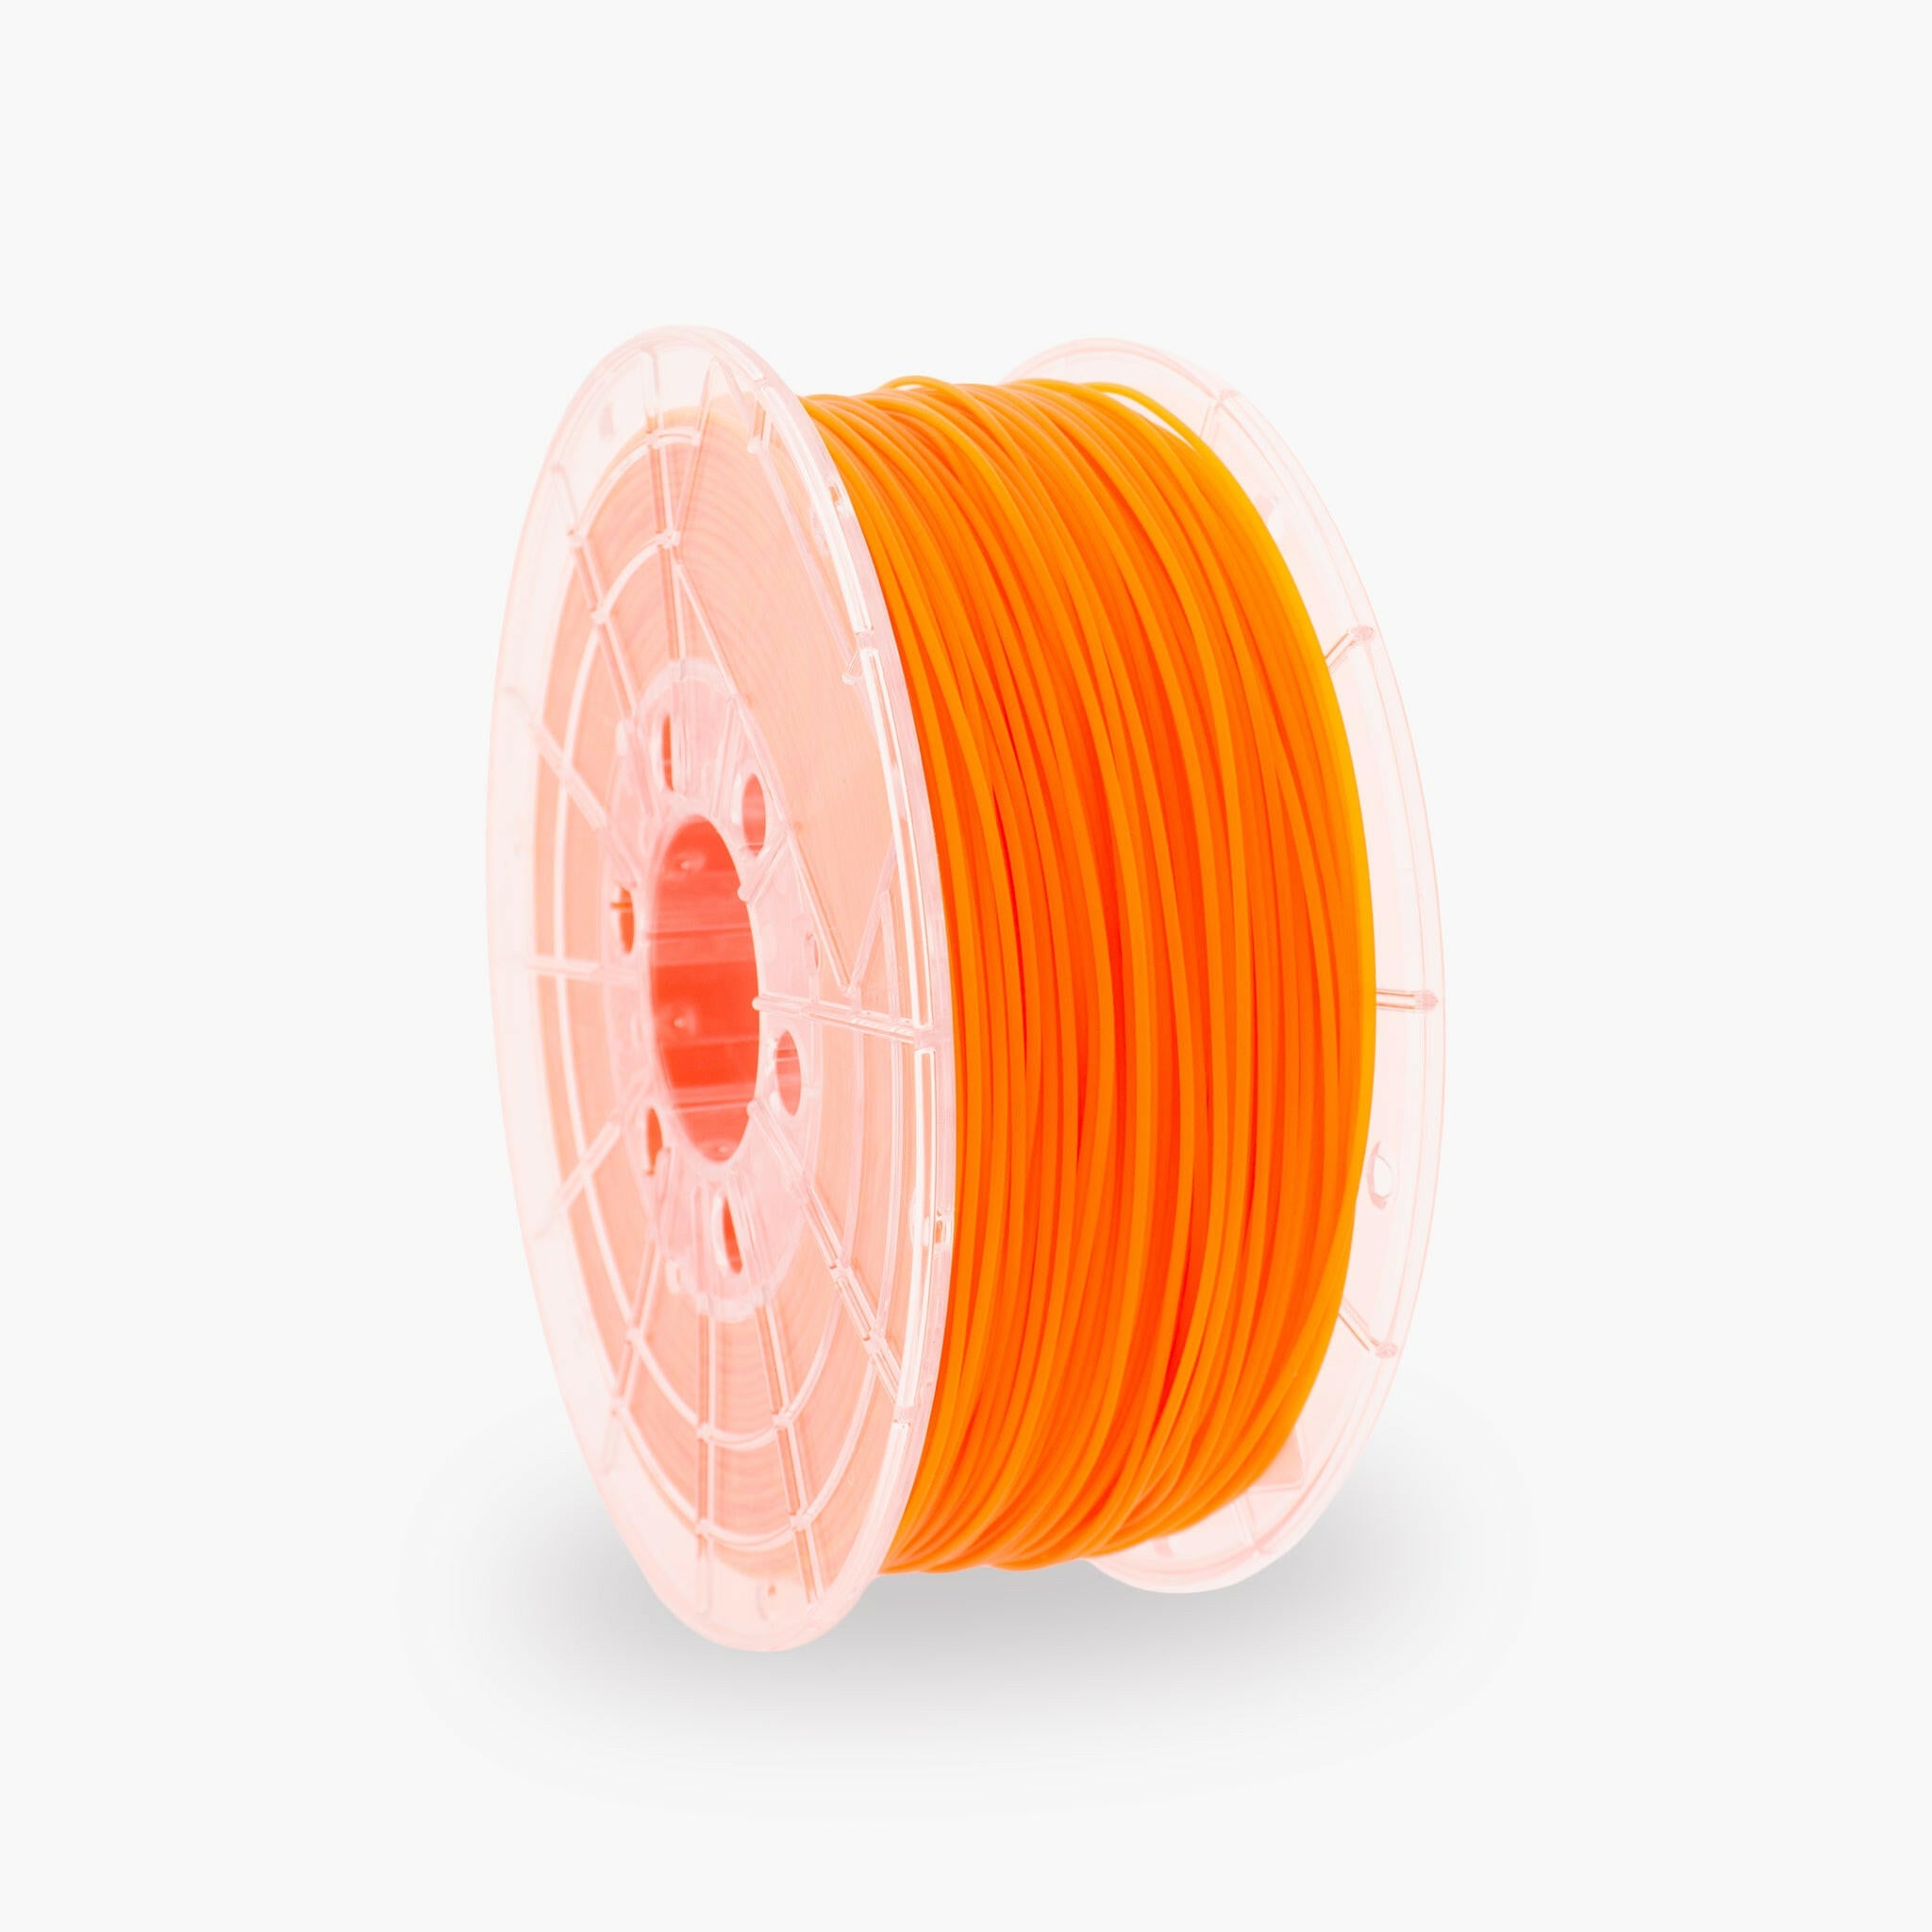 Fluor Orange PLA 3D Printer Filament with a diameter of 1.75mm on a 1KG Spool.